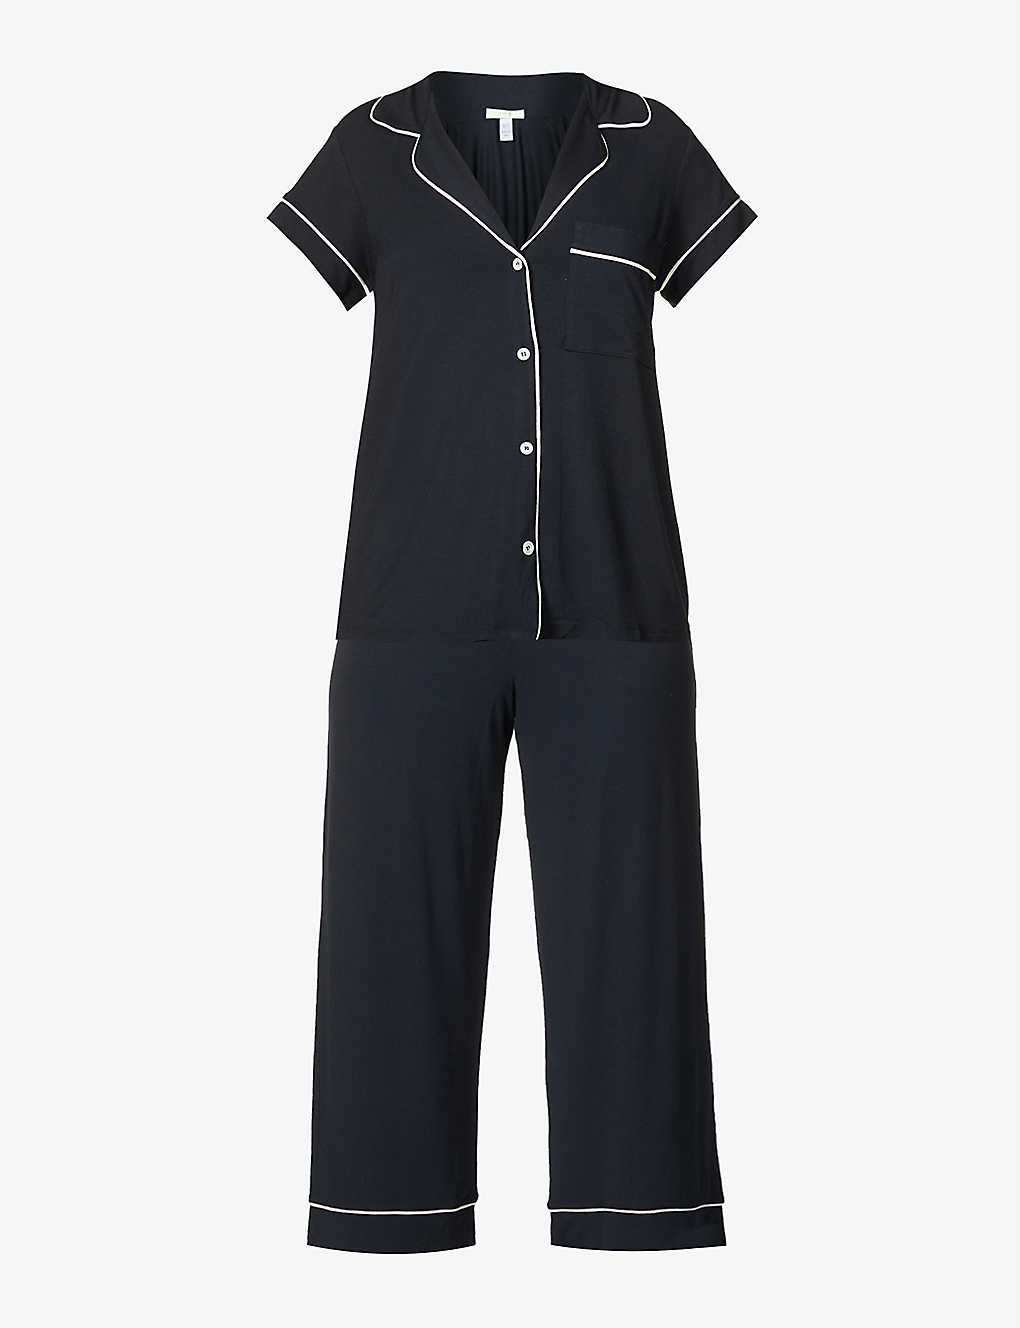 Eberjey Gisele Stretch-jersey Pyjama Set In Black Sorbet